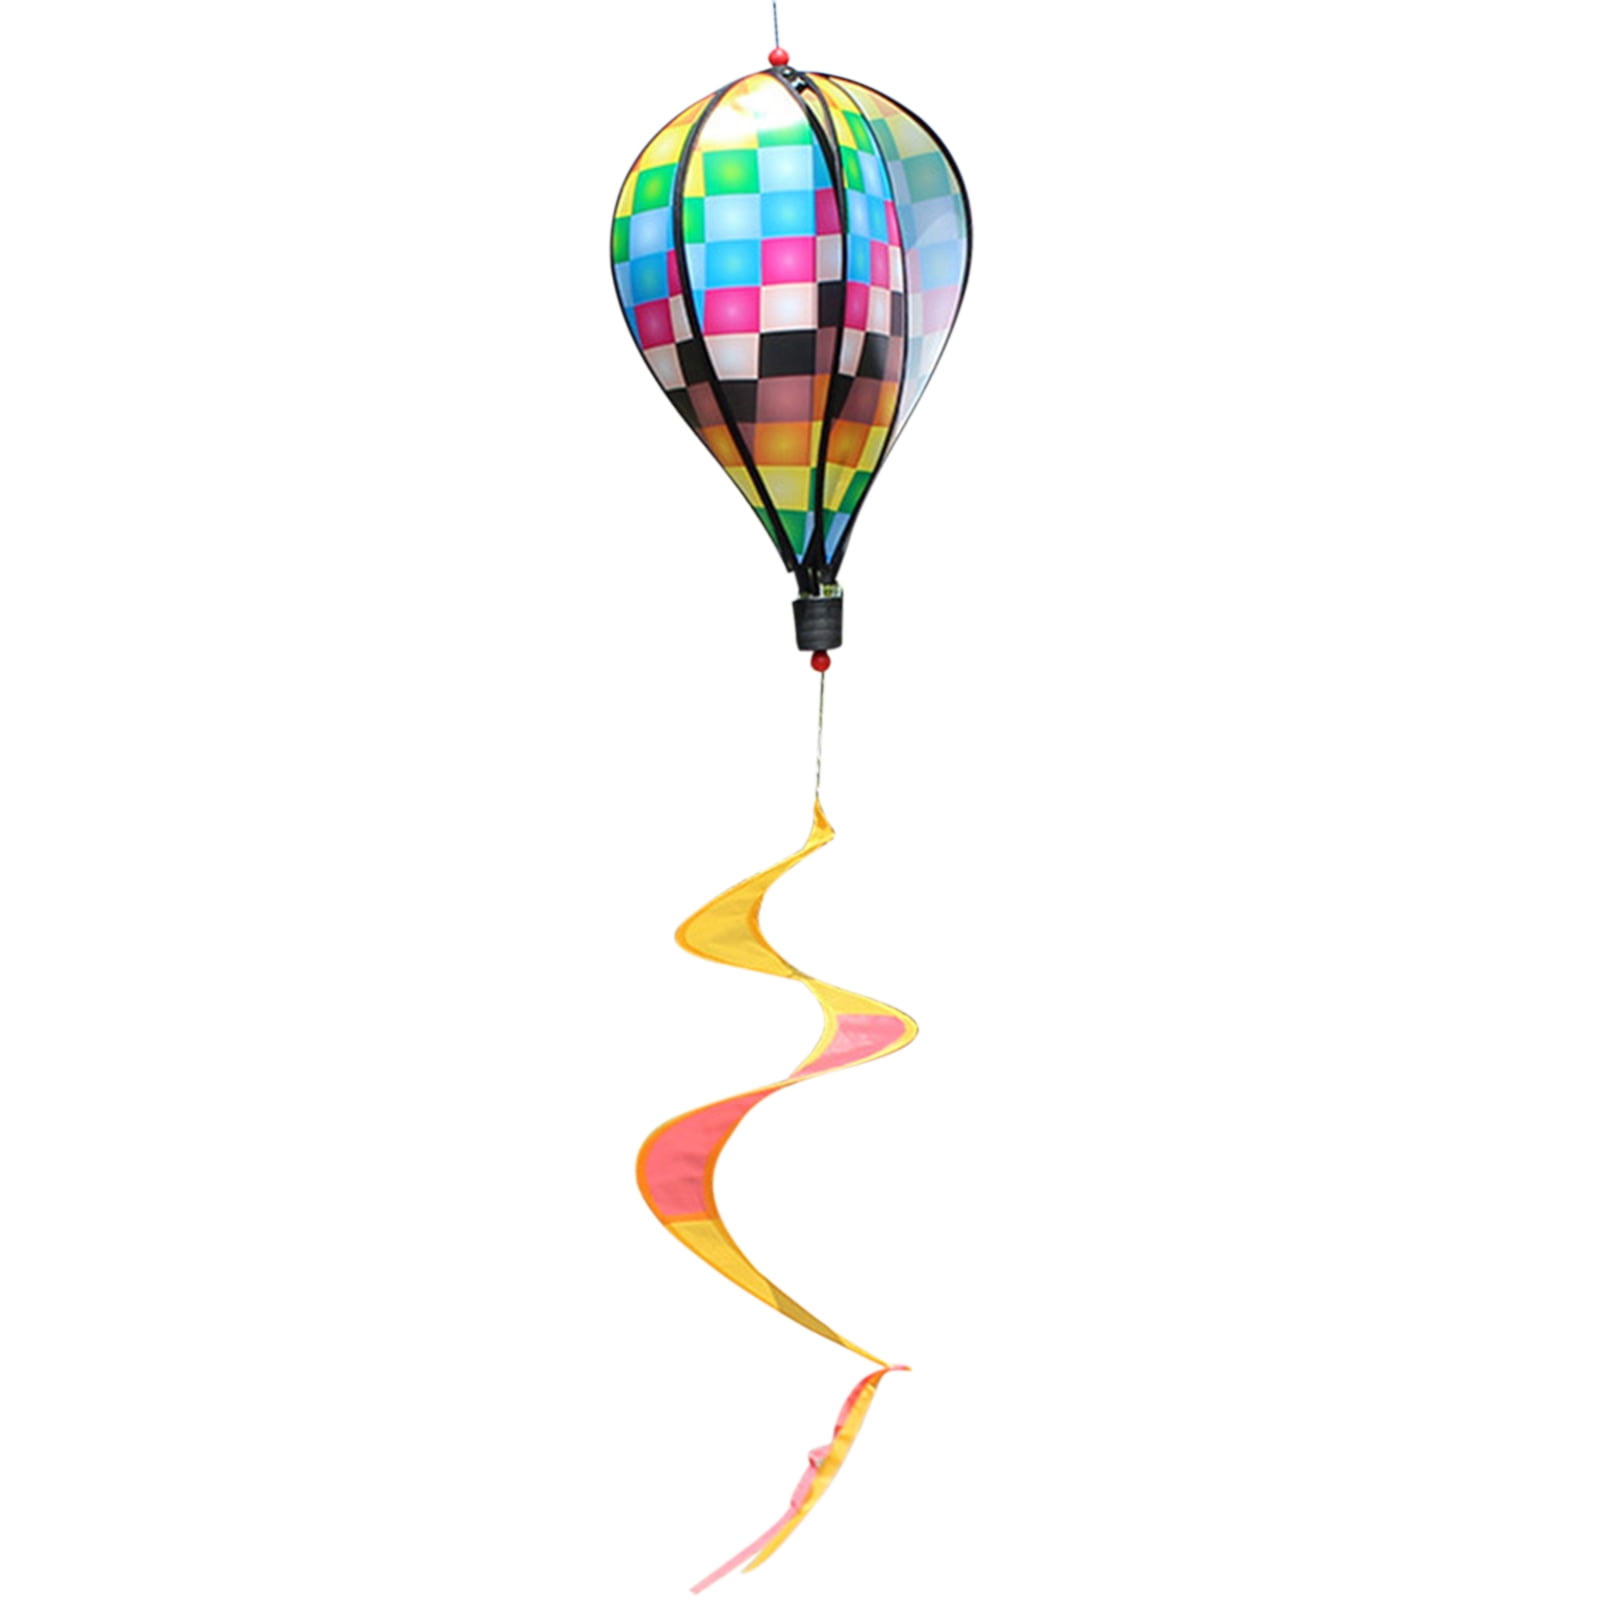 Hong TTH Striped Rainbow Windsock Hot Air Balloon Wind Spinner Garden Yard Outdoor Decor Toy 